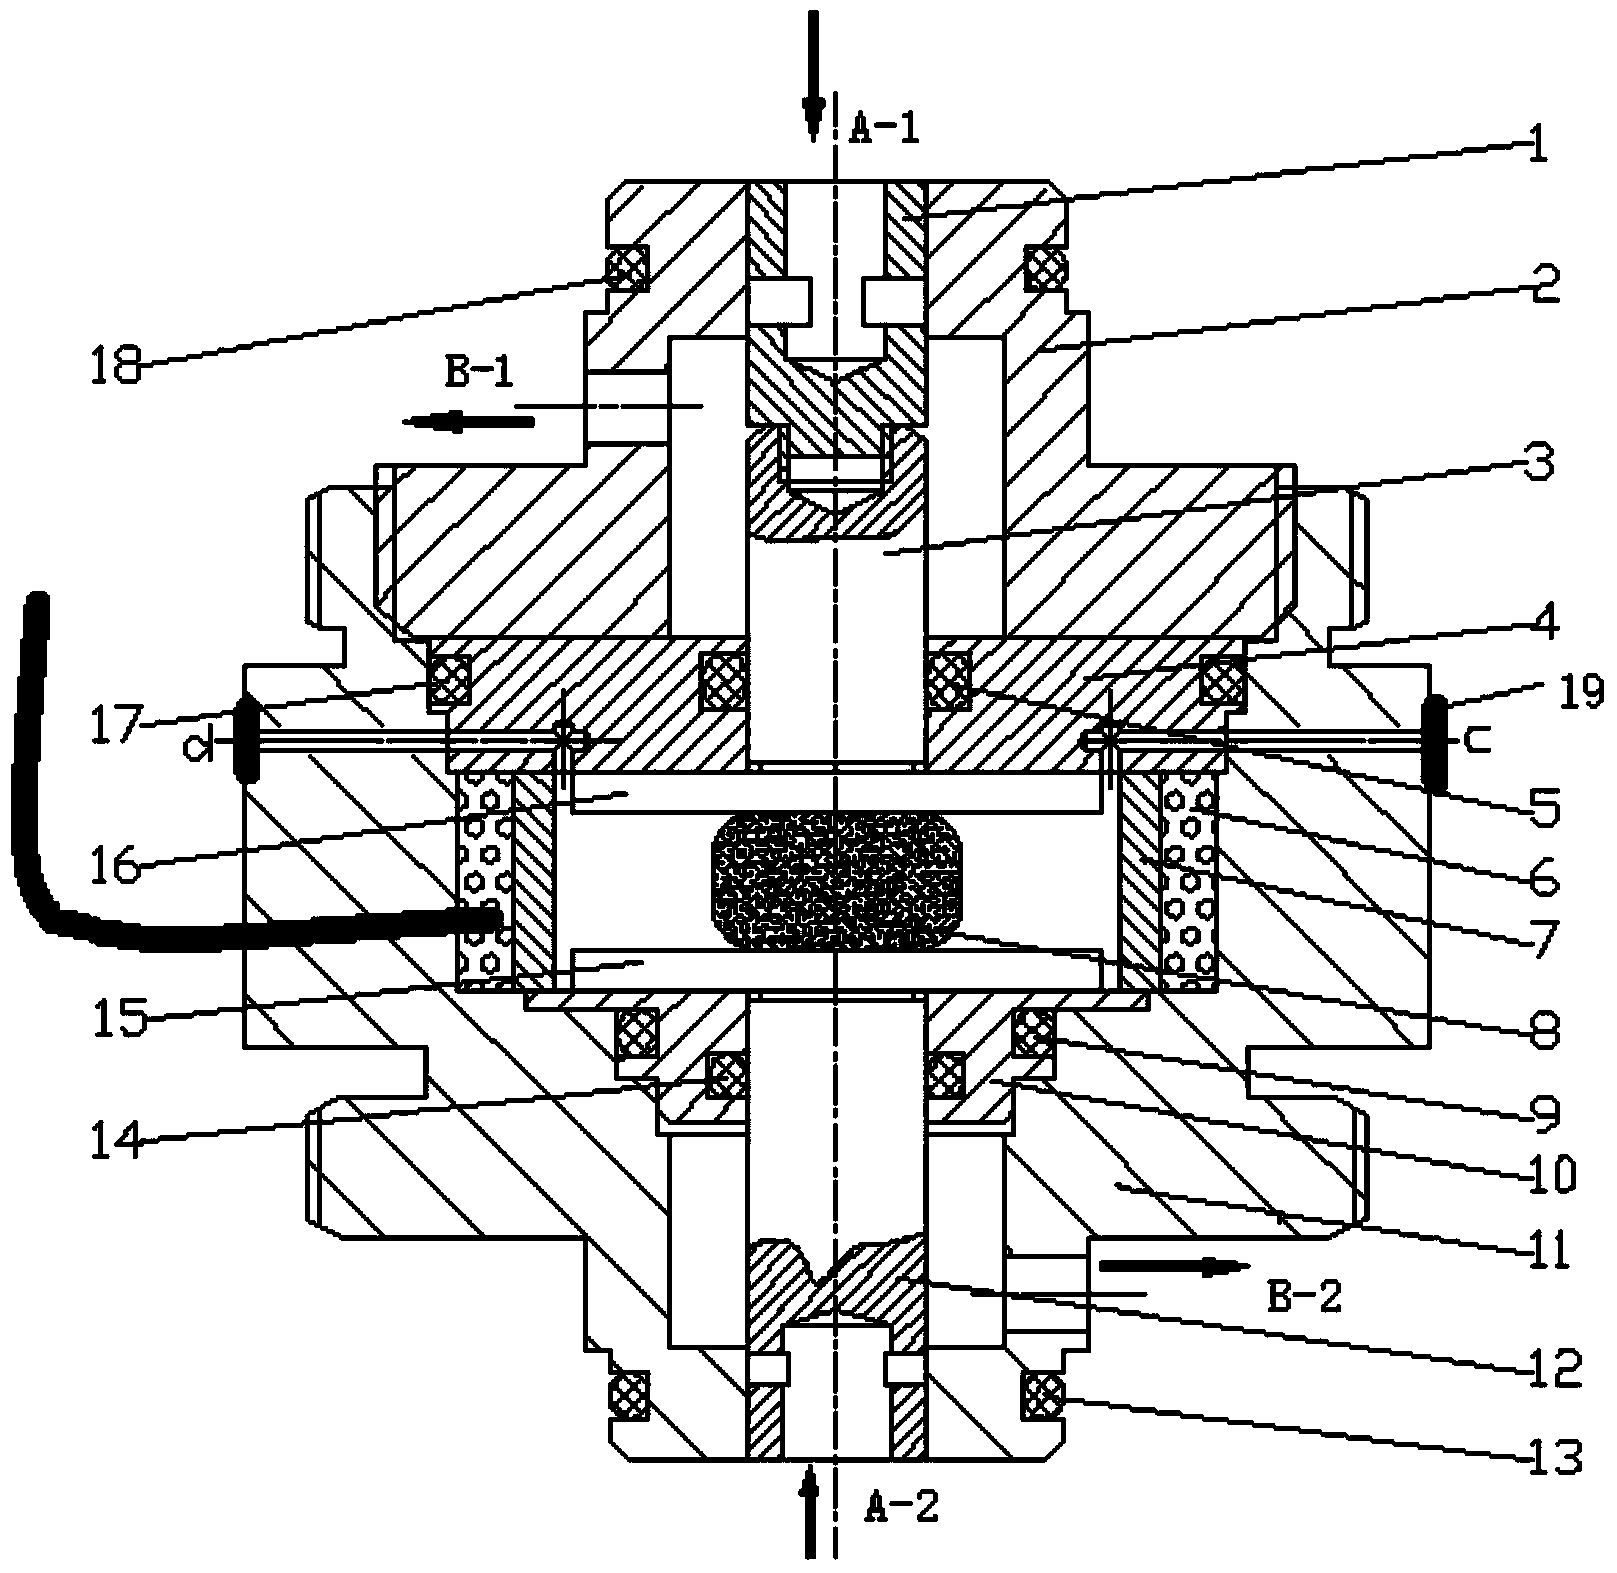 Two-way flow control valve